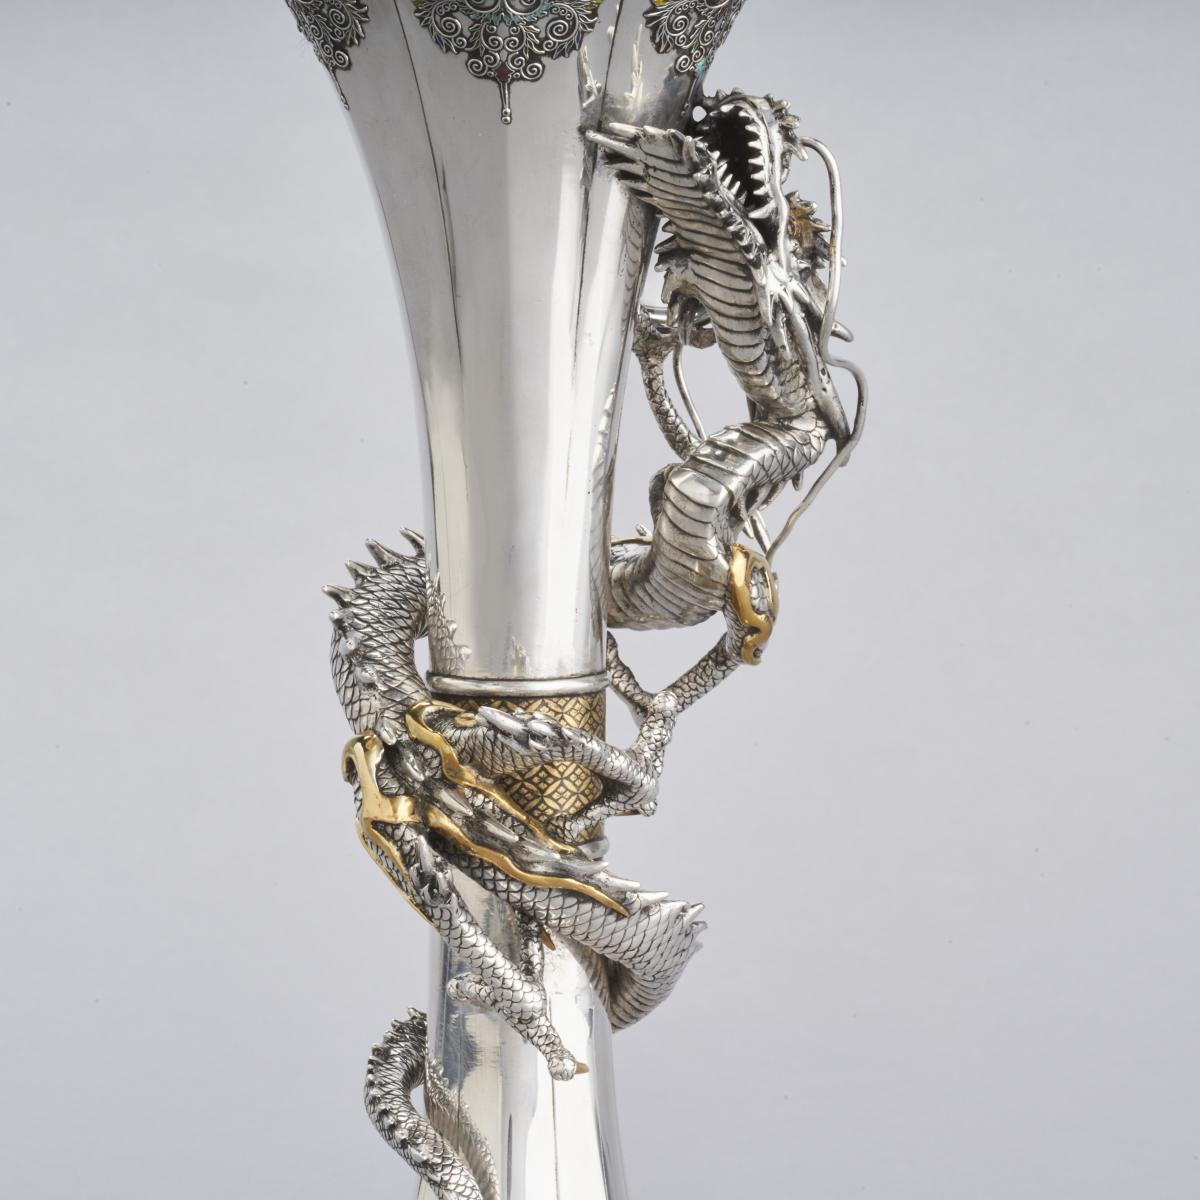 Japanese silver and enamel vase with dragon, signed Bokuryu hokkyo, Oryusai, Ryoshu koku 墨流北居, 桜柳斎, 漁舟刻, Meiji Period.